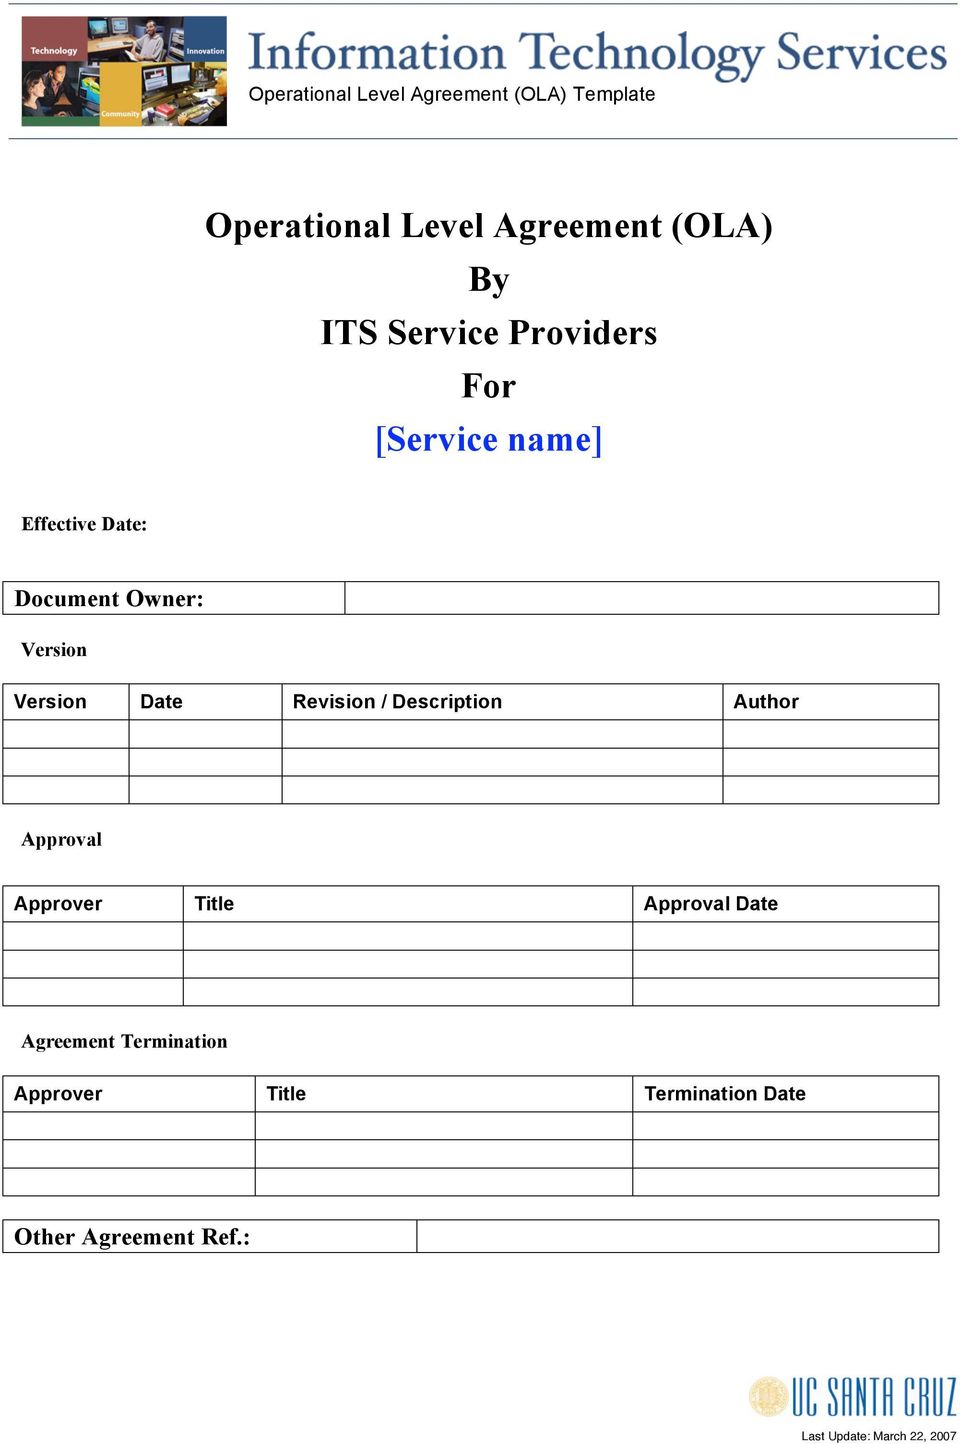 Operating Level Agreement (OLA) Template - PDF Free Download Regarding information technology service level agreement template